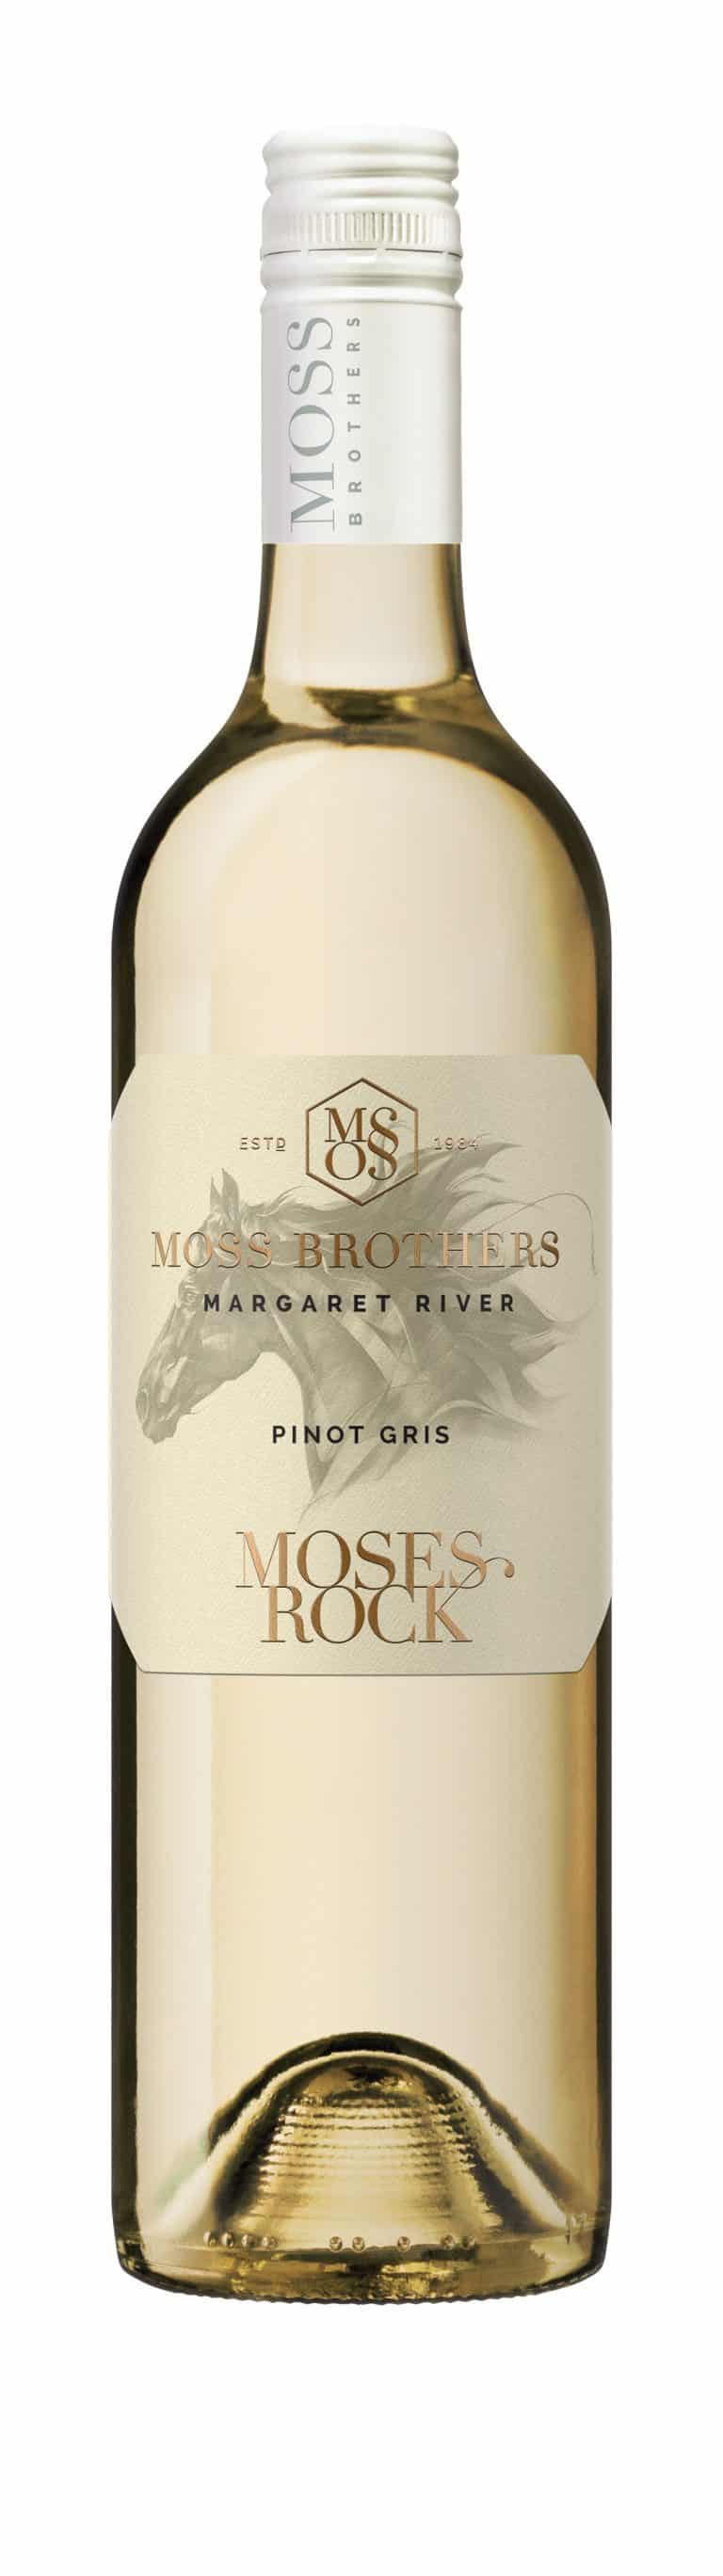 Moss Brothers MosesRock PinotGris